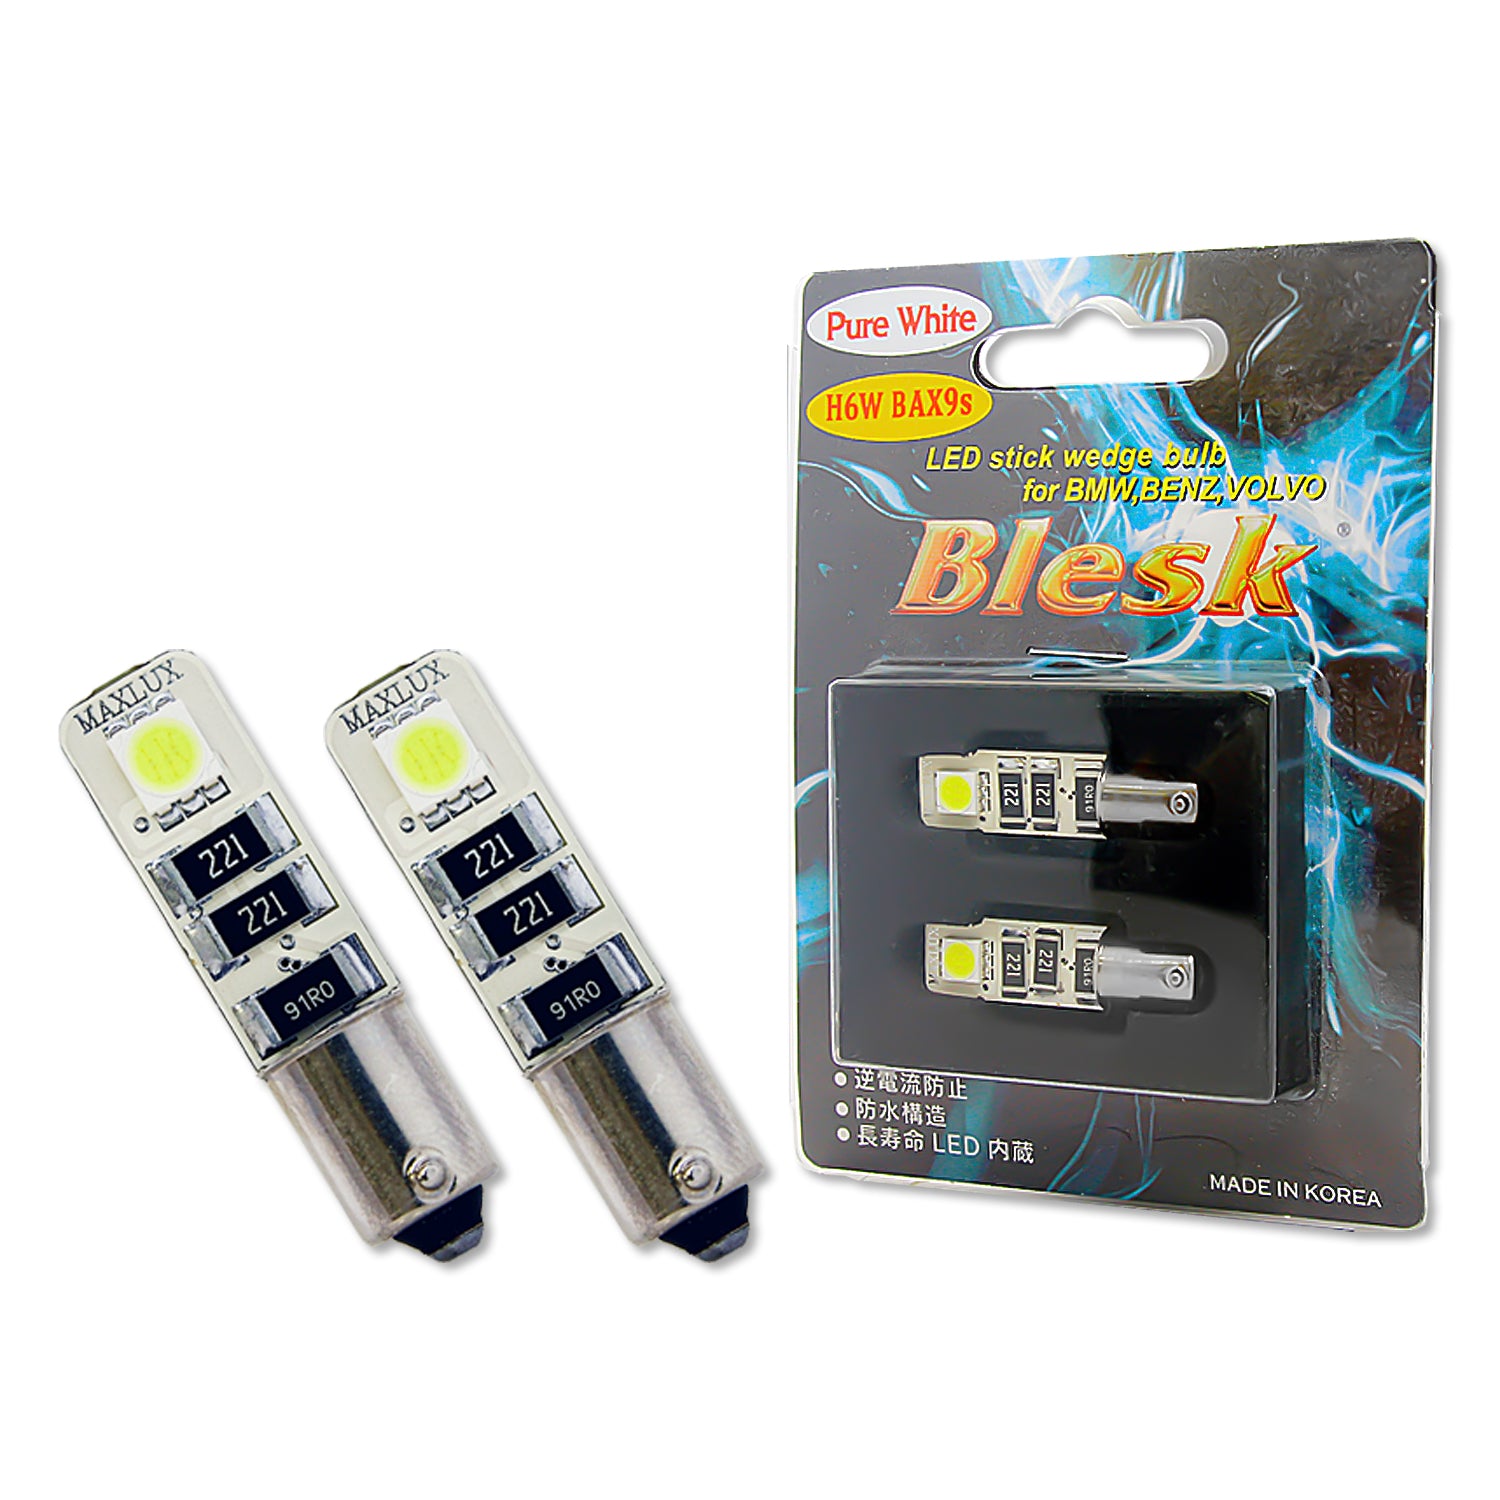 BAX9S (H6W) - SMD LED bulbs - White